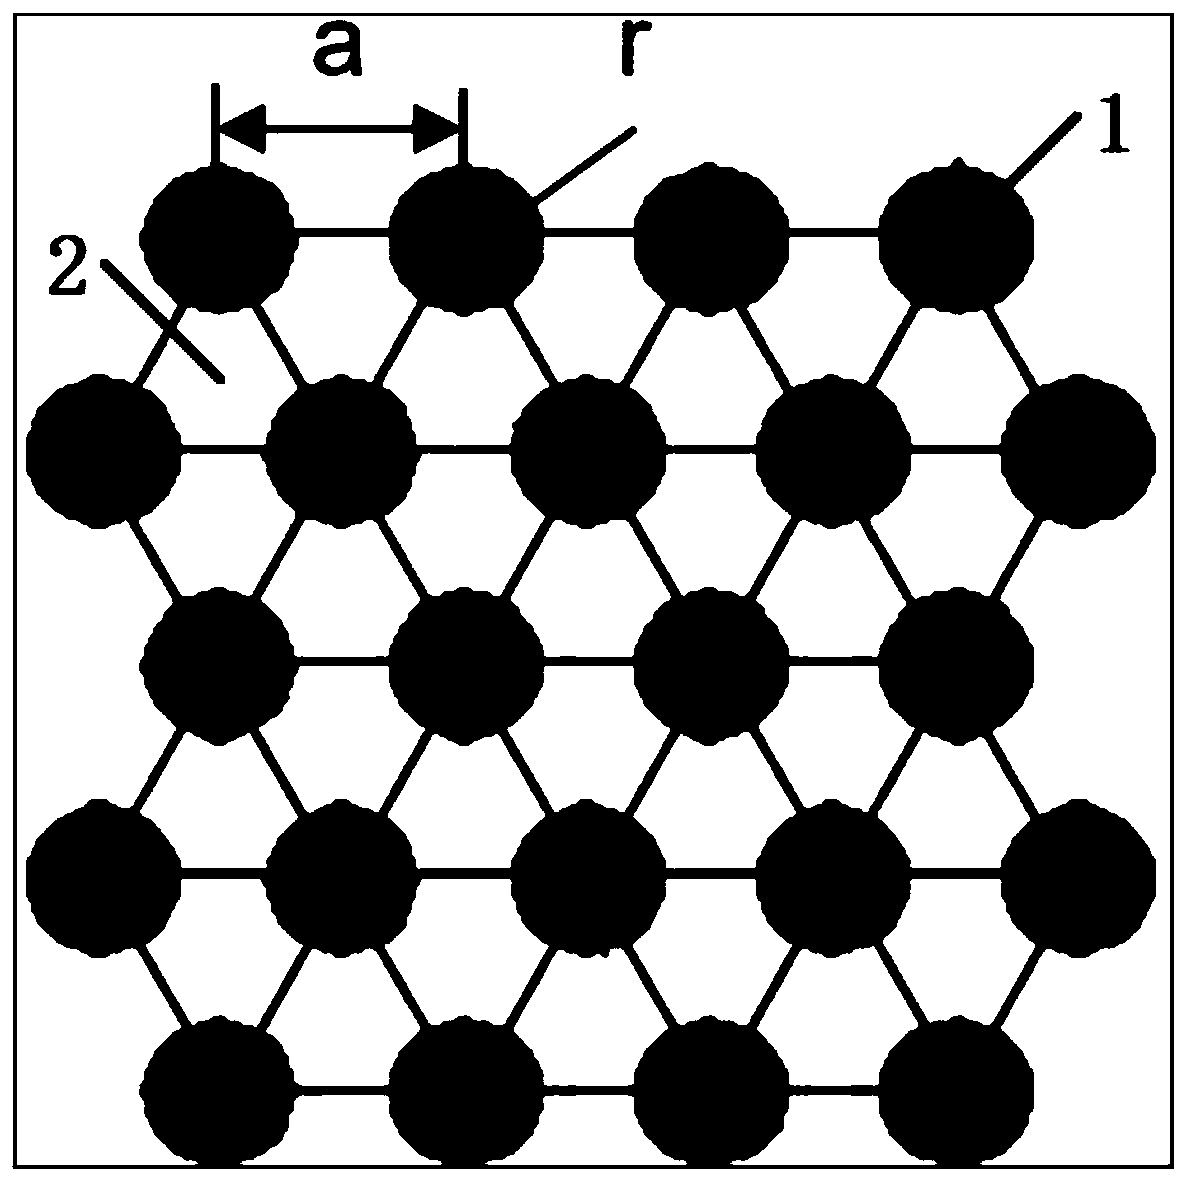 Triangular lattice photonic crystal waveguide based on air column and lithium niobate air column structure